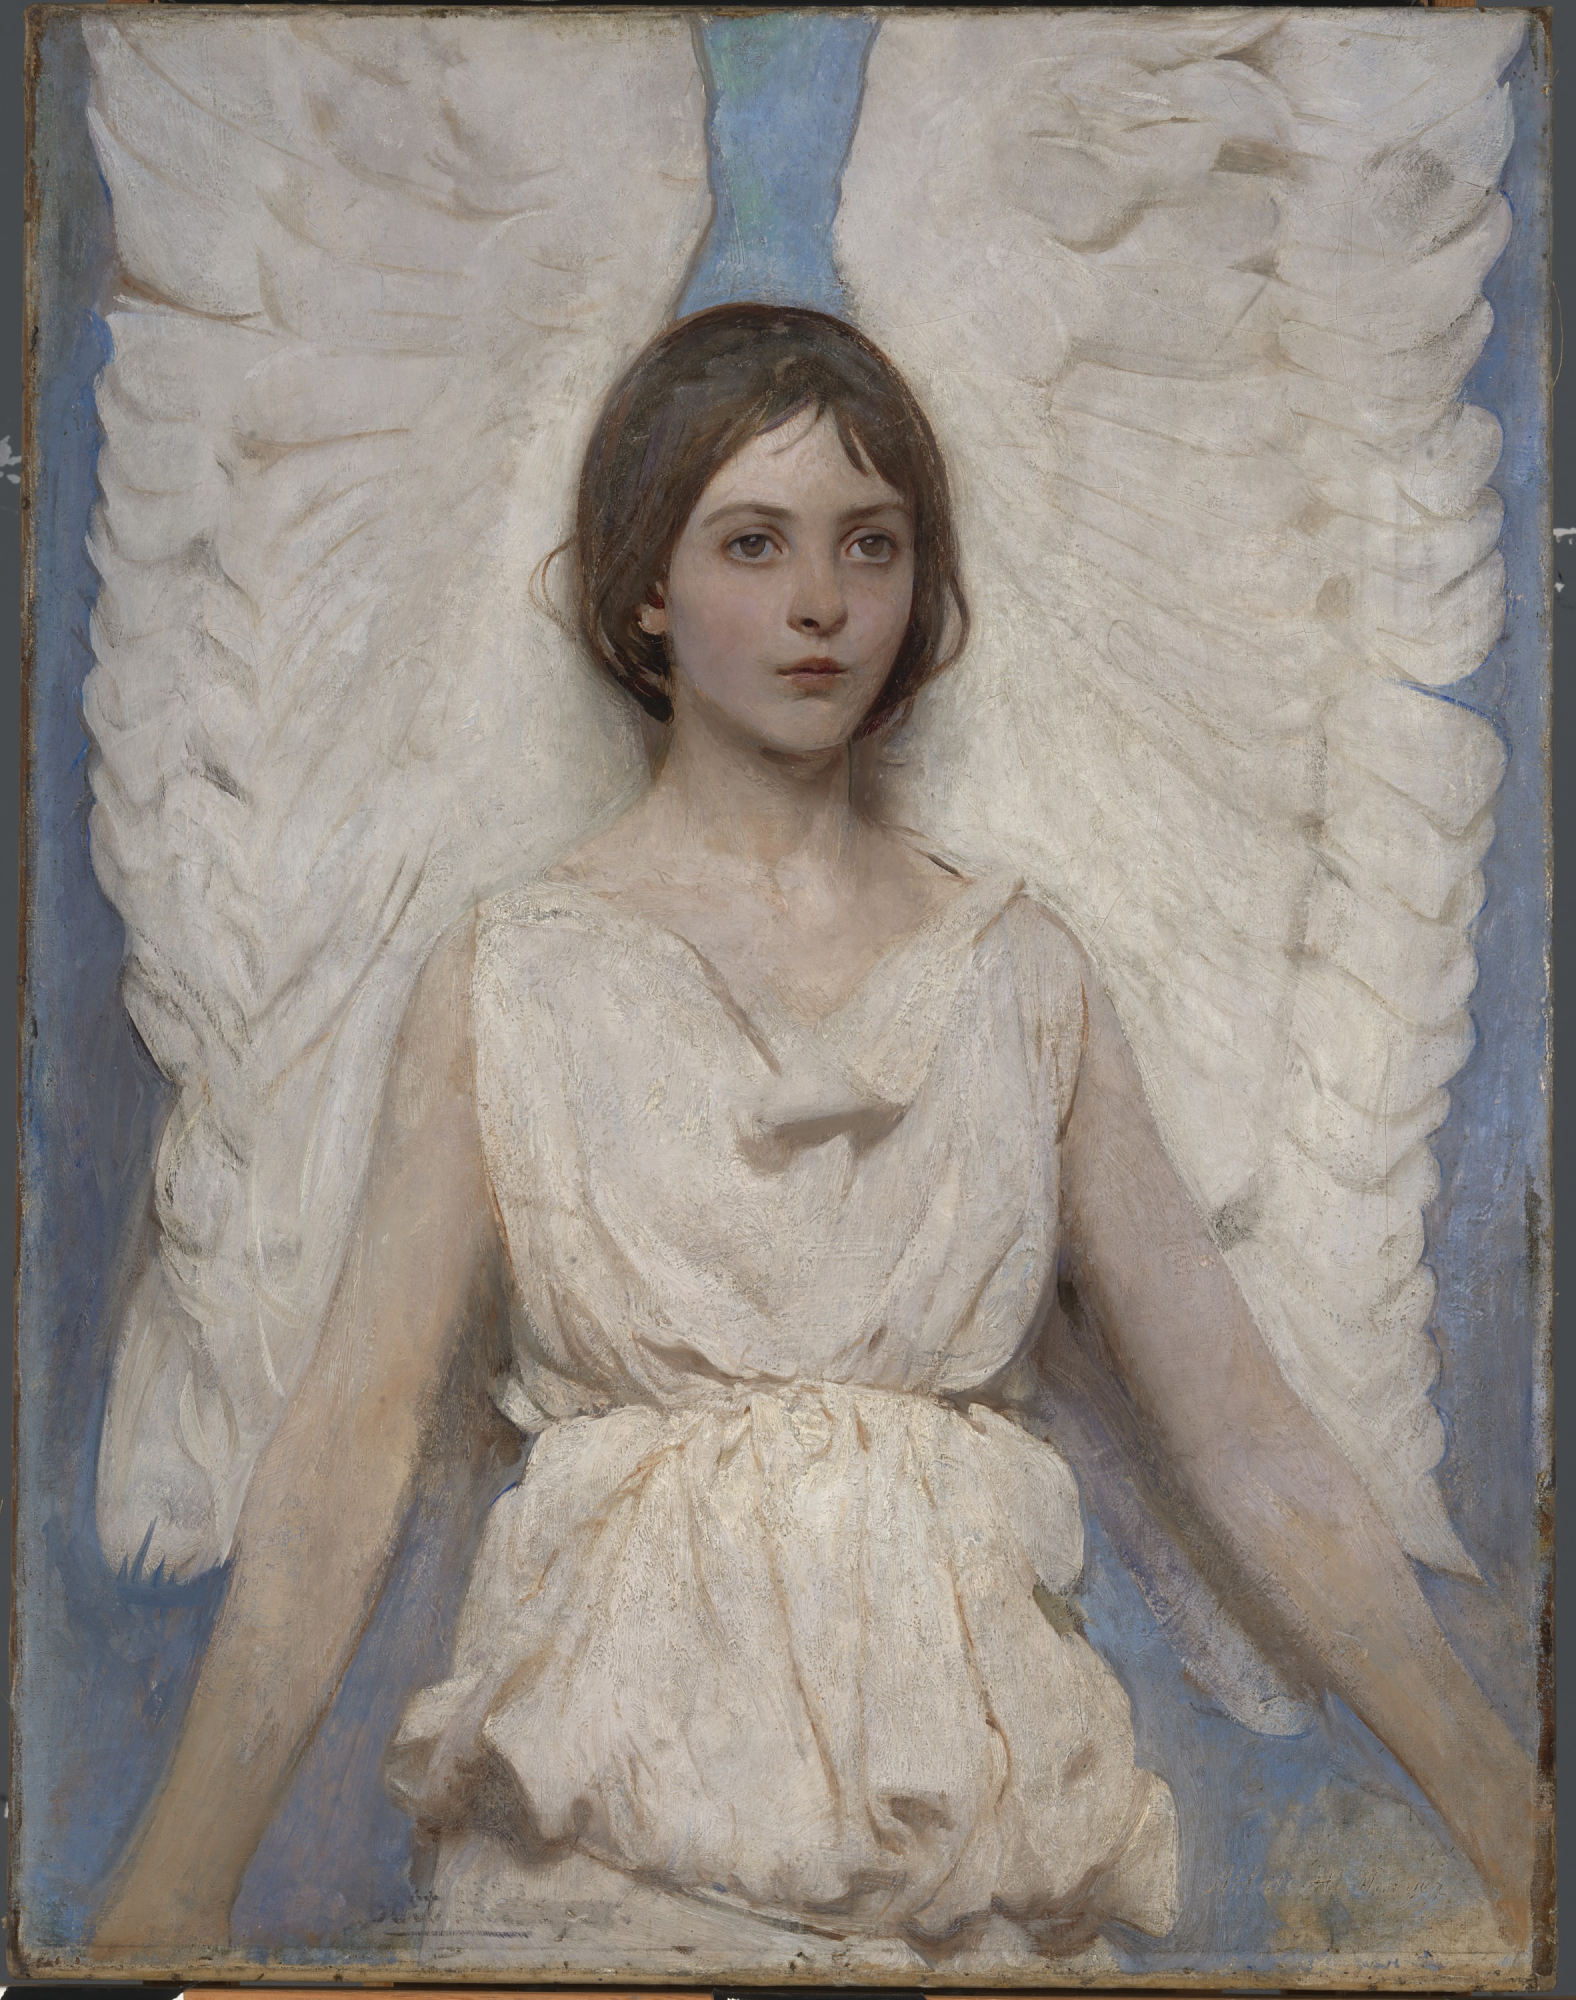 Melek by Abbott Handerson Thayer - 1887 - 92.0 x 71.5 cm 